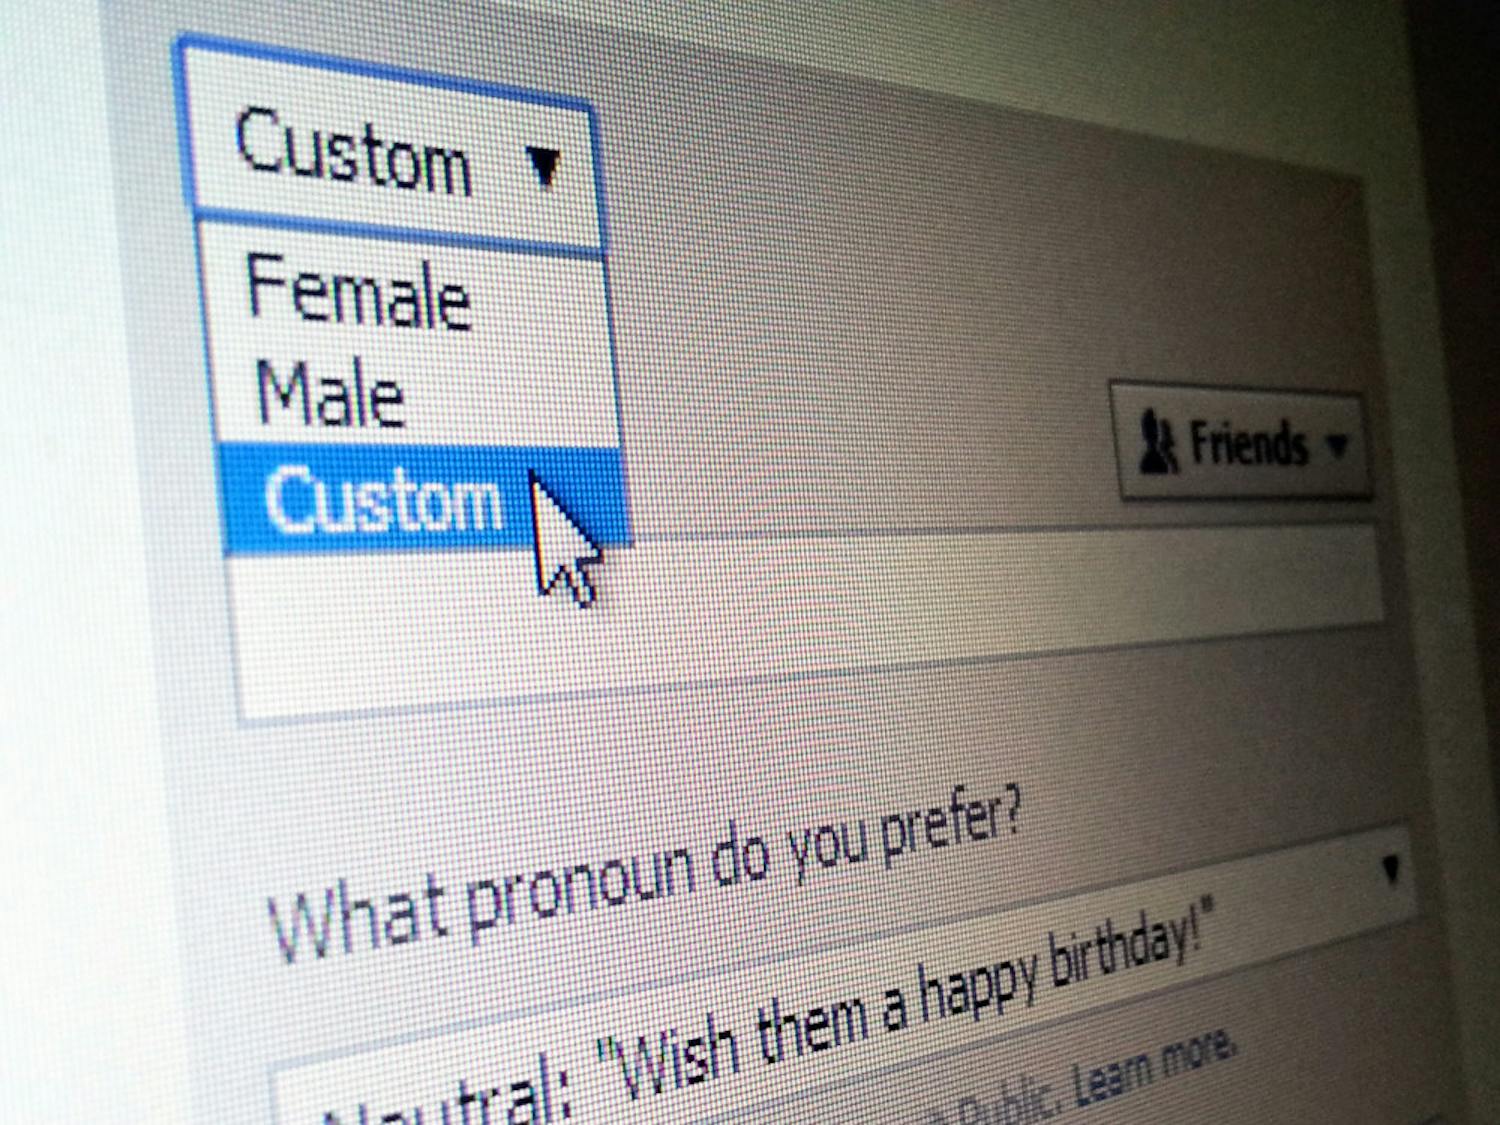 Facebook's new "Custom" gender option